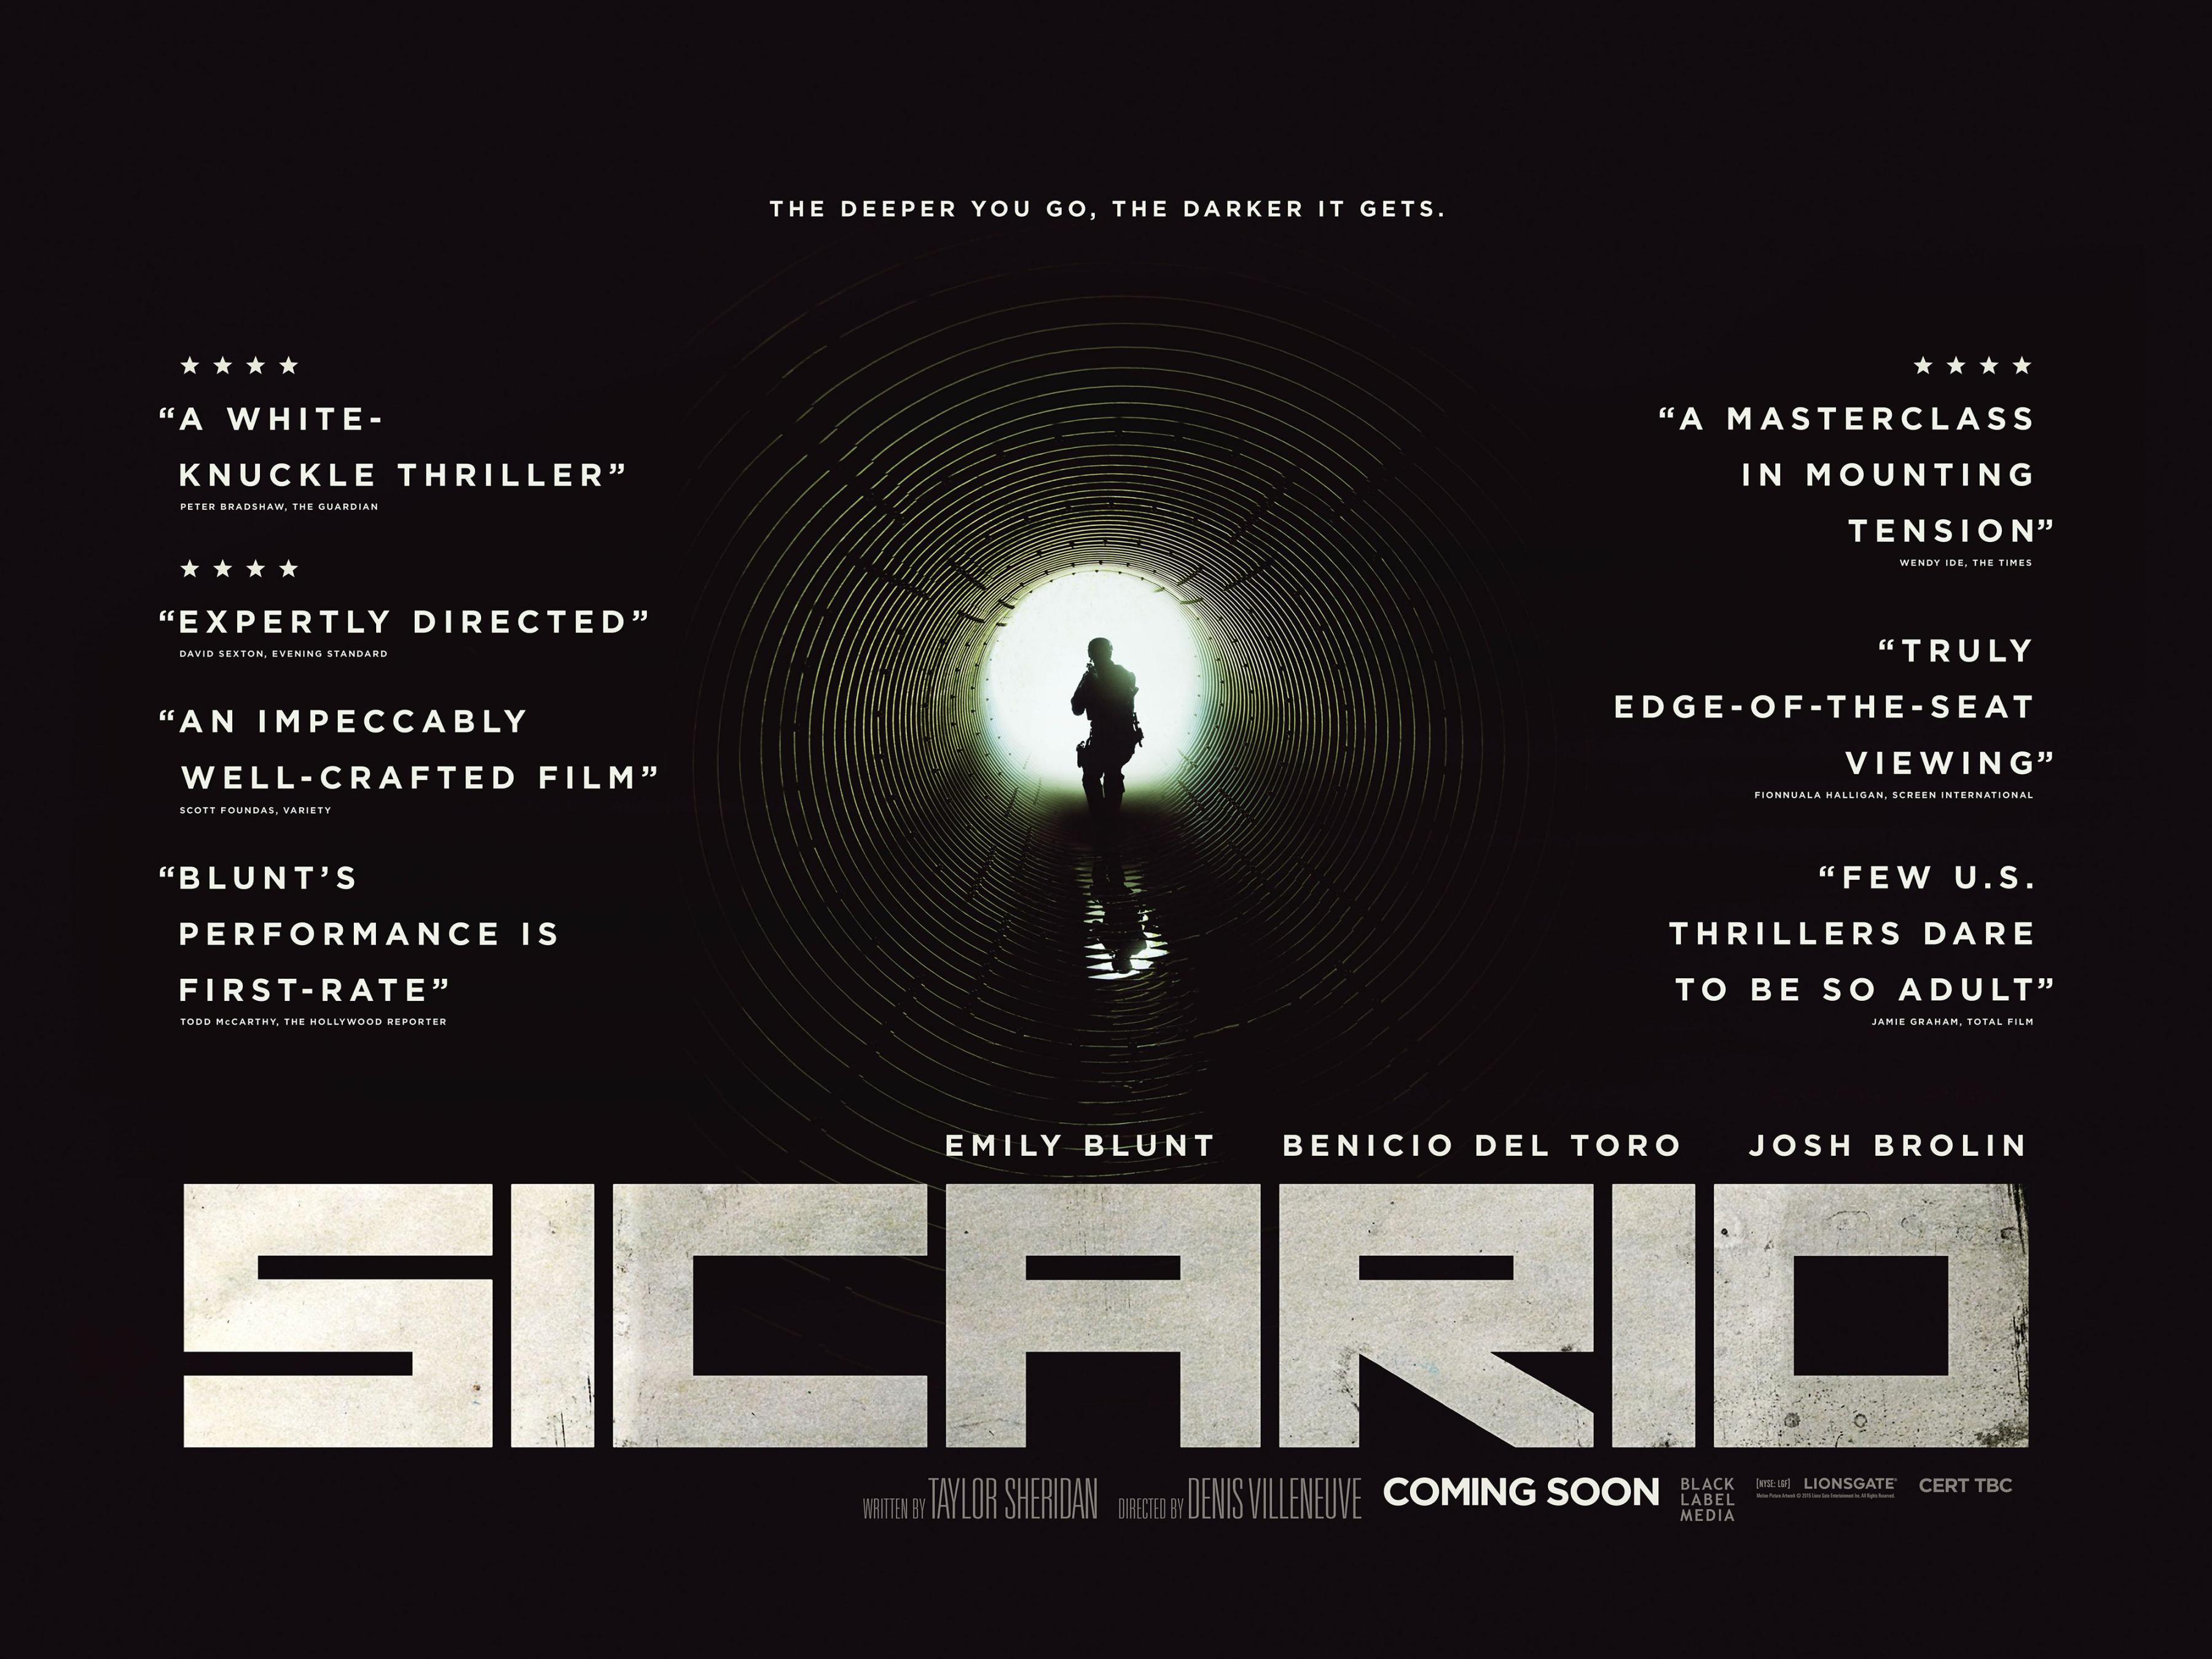 Постер фильма Убийца | Sicario